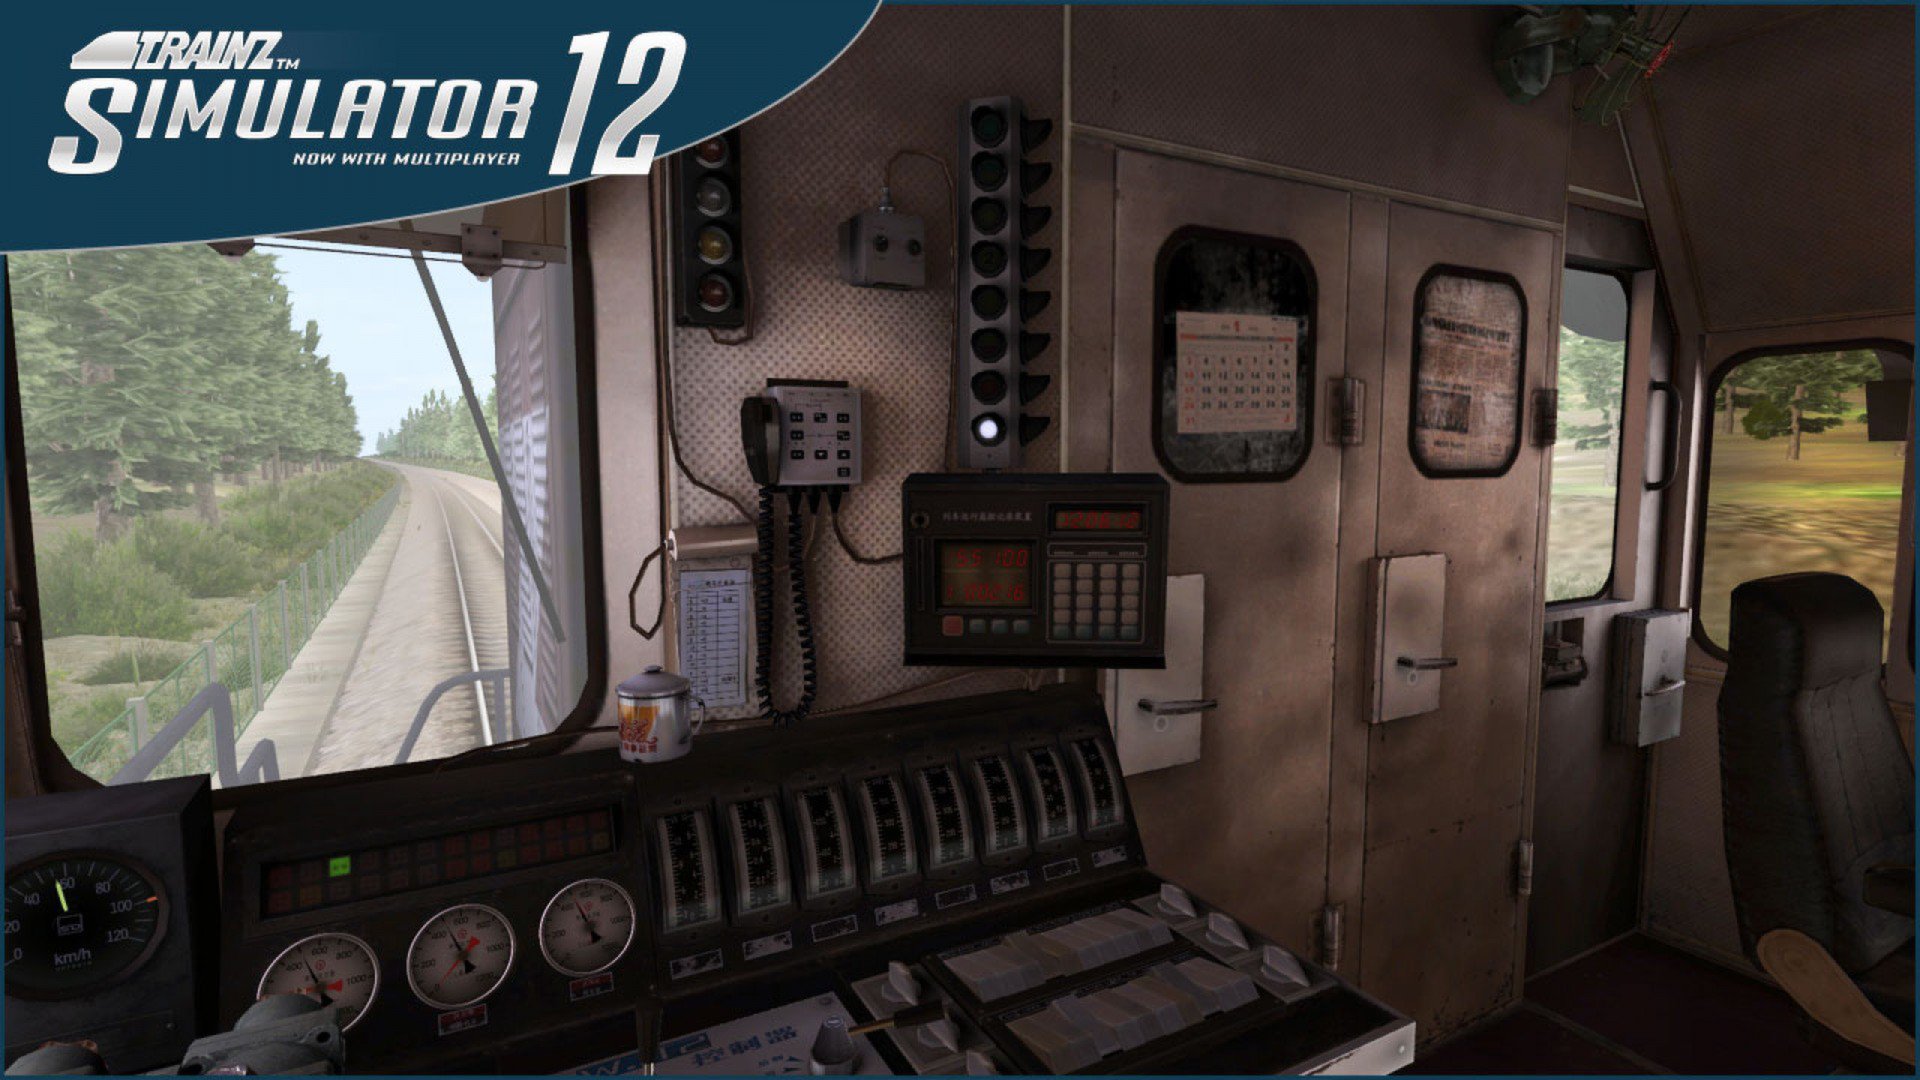 trainz simulator 12 cd key free download